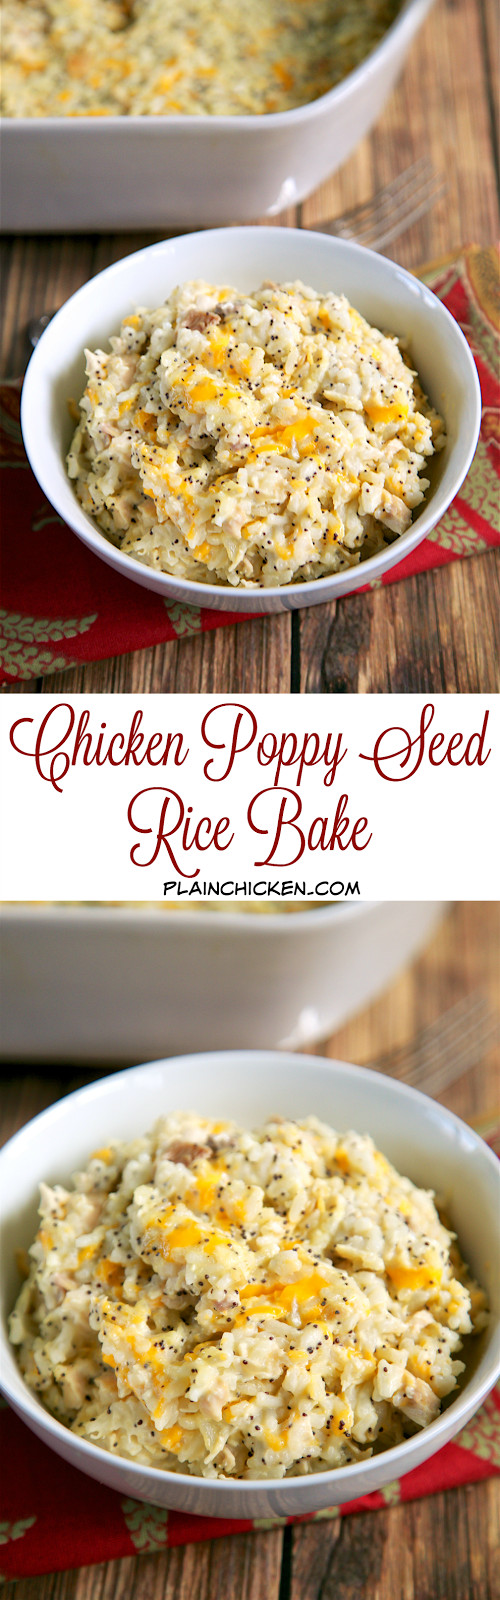 Poppy Seed Chicken Casserole With Rice
 Chicken Poppy Seed Rice Bake